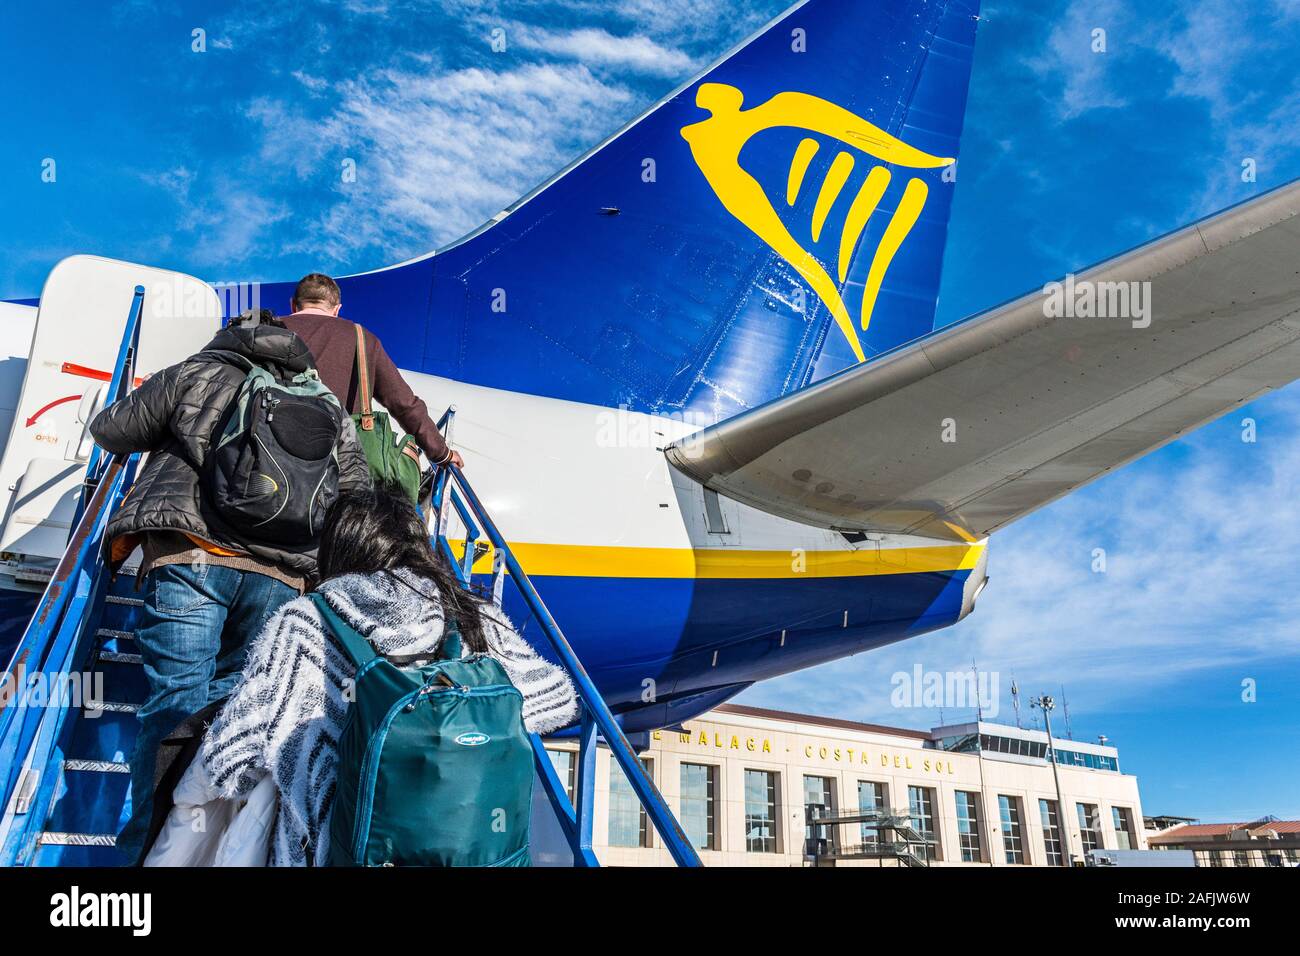 Passengers board a Ryanair flight at Malaga Airport, Spain Stock Photo